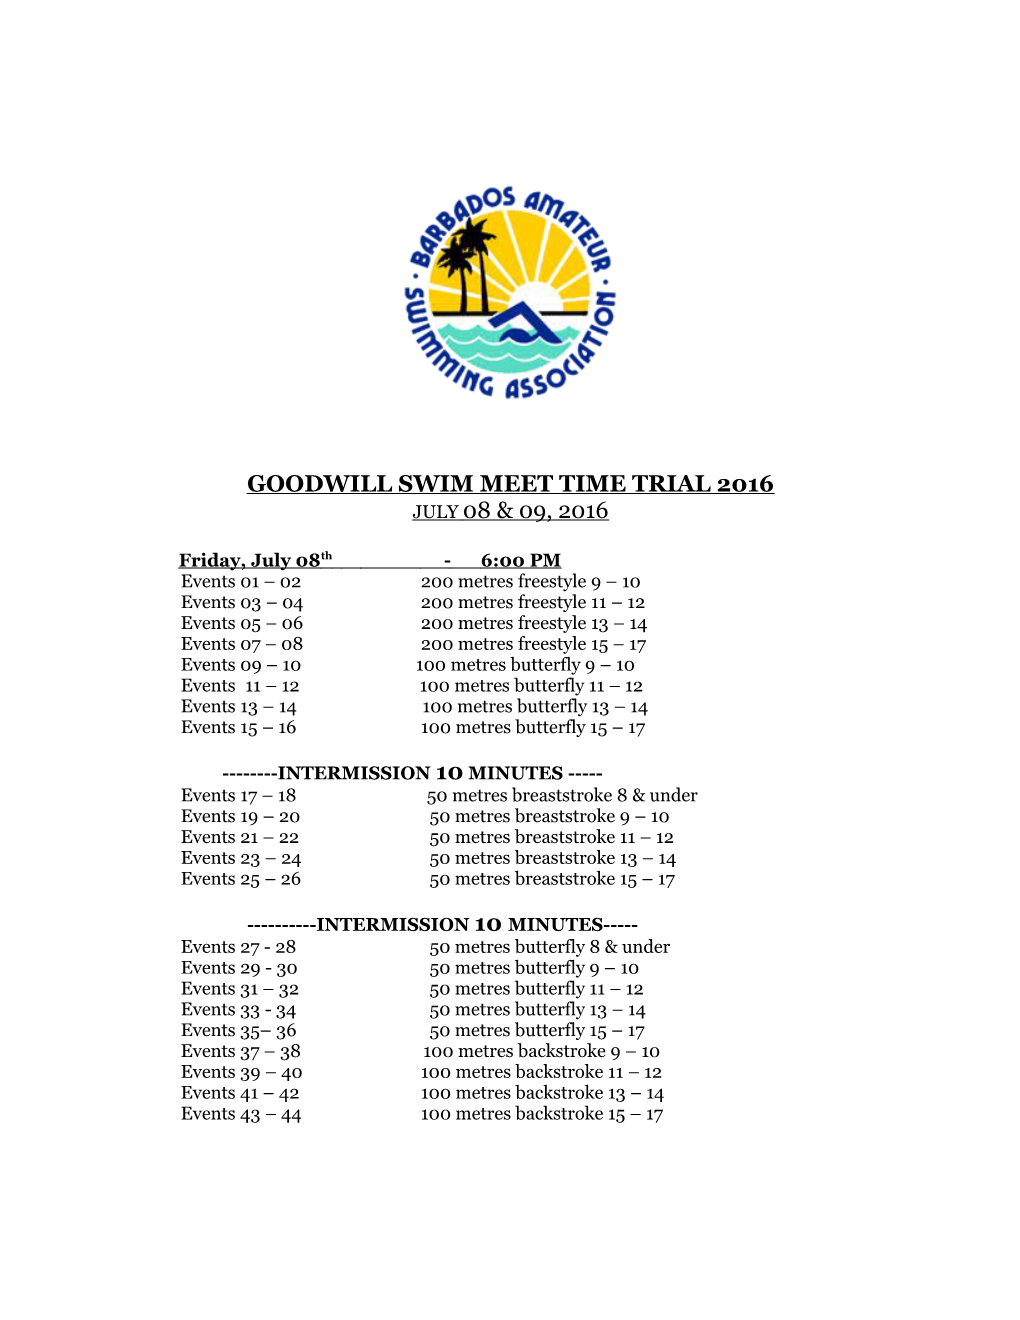 Goodwill Swim Meet Time Trial 2016